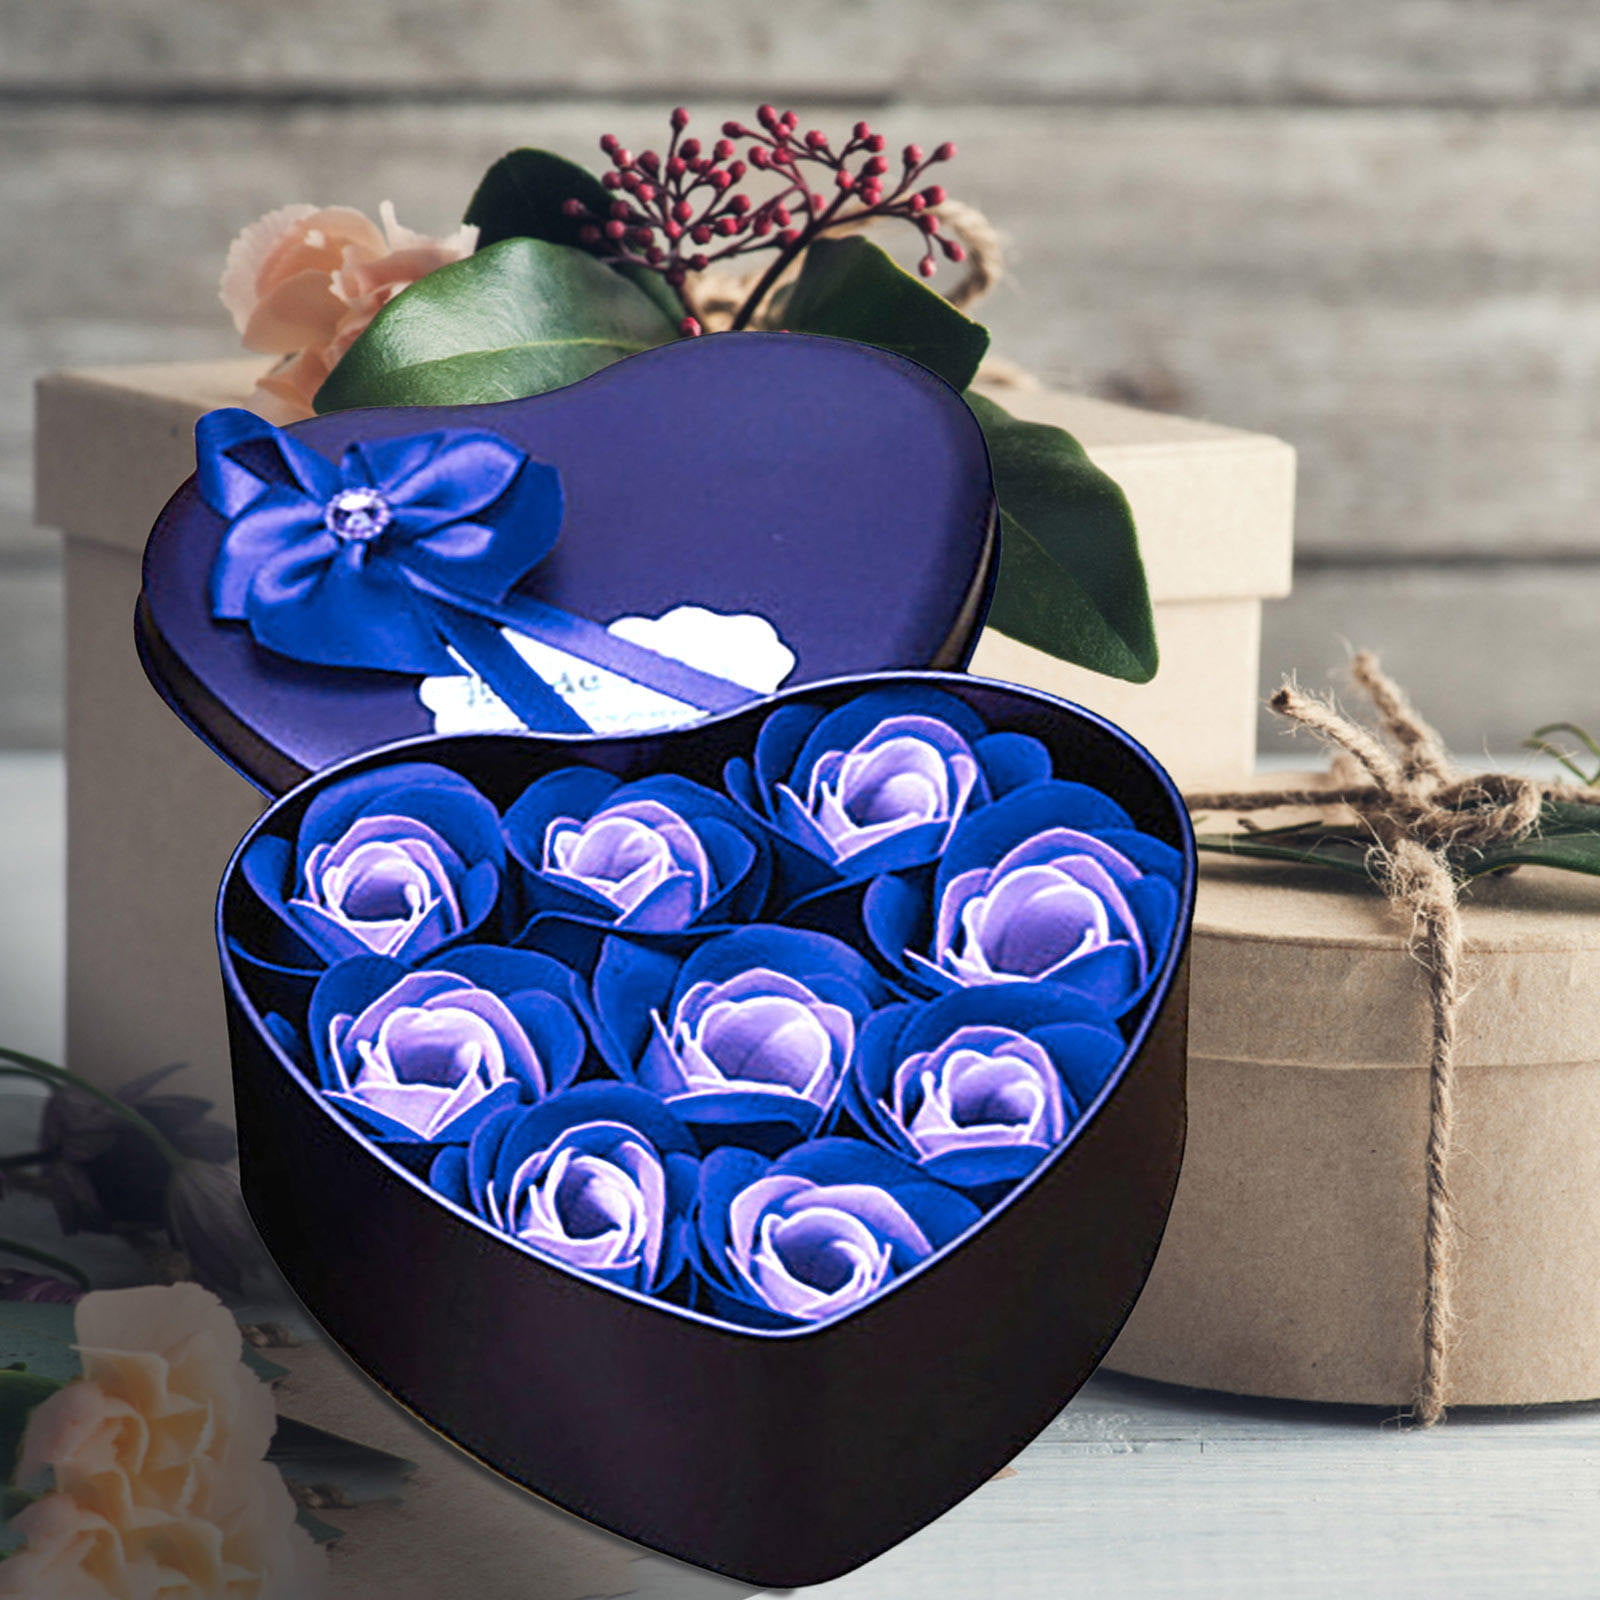 Bouquet Romantic Valentine's Day Gifts Rose Flower Artificial Decor Bath Soap 